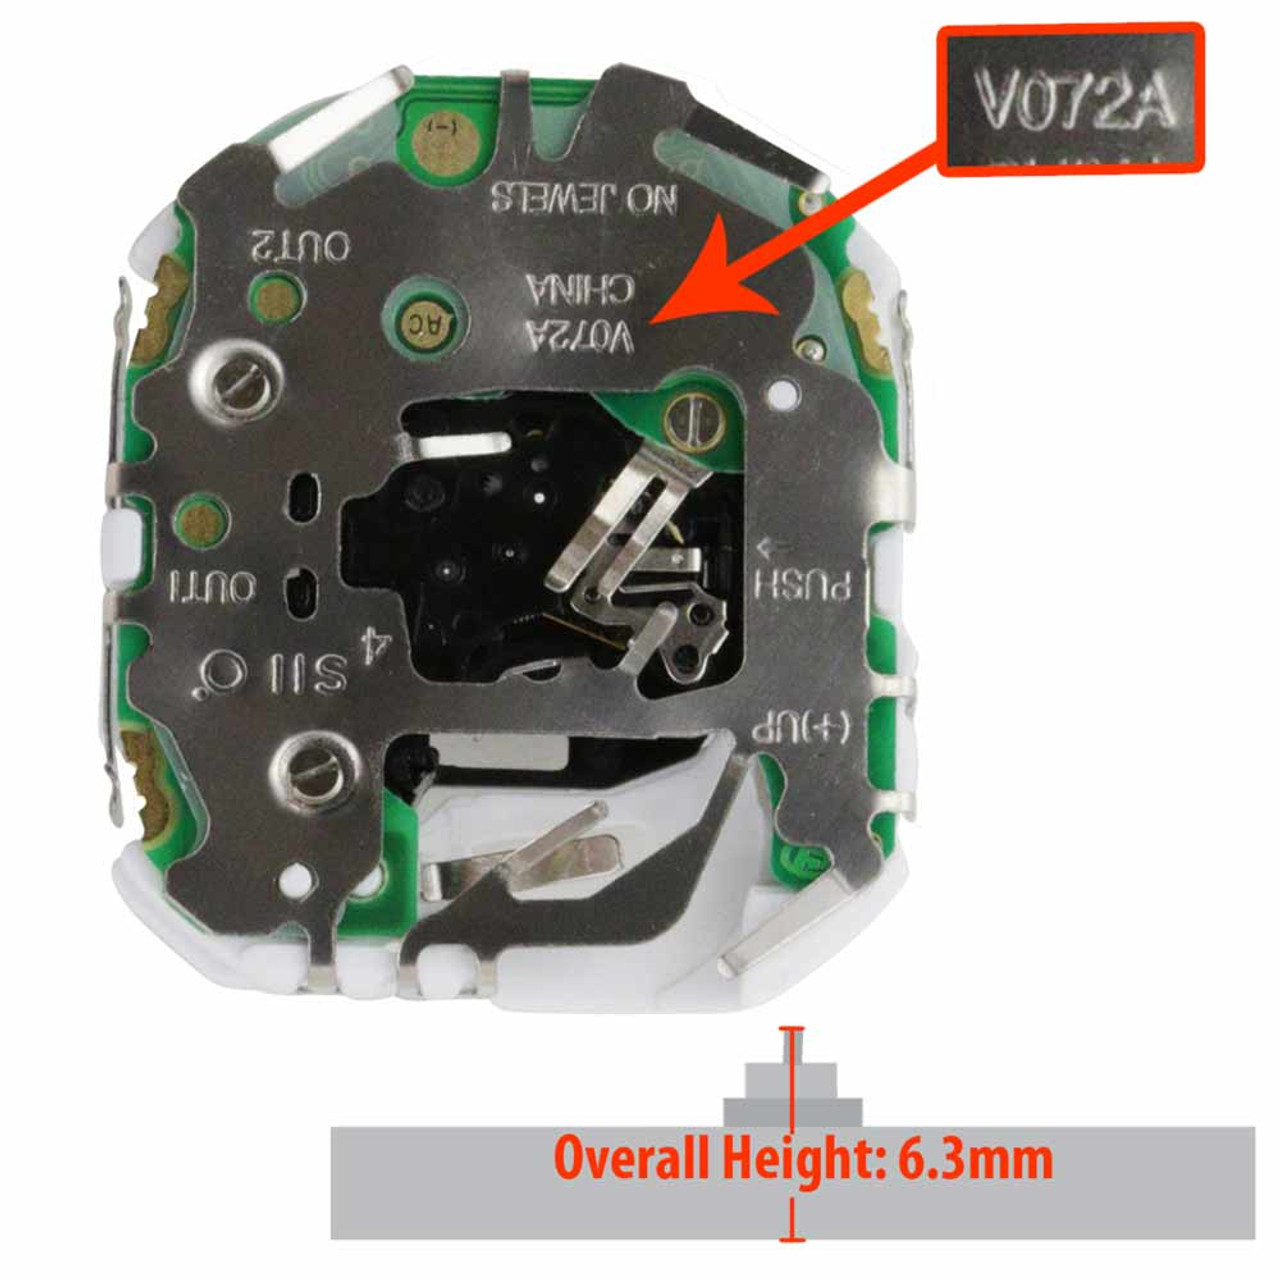 brugerdefinerede Isbjørn Fortryd Genuine Seiko Analog Digital Quartz Watch Movement V072.0 Silver Display  Overall Height 6.3mm